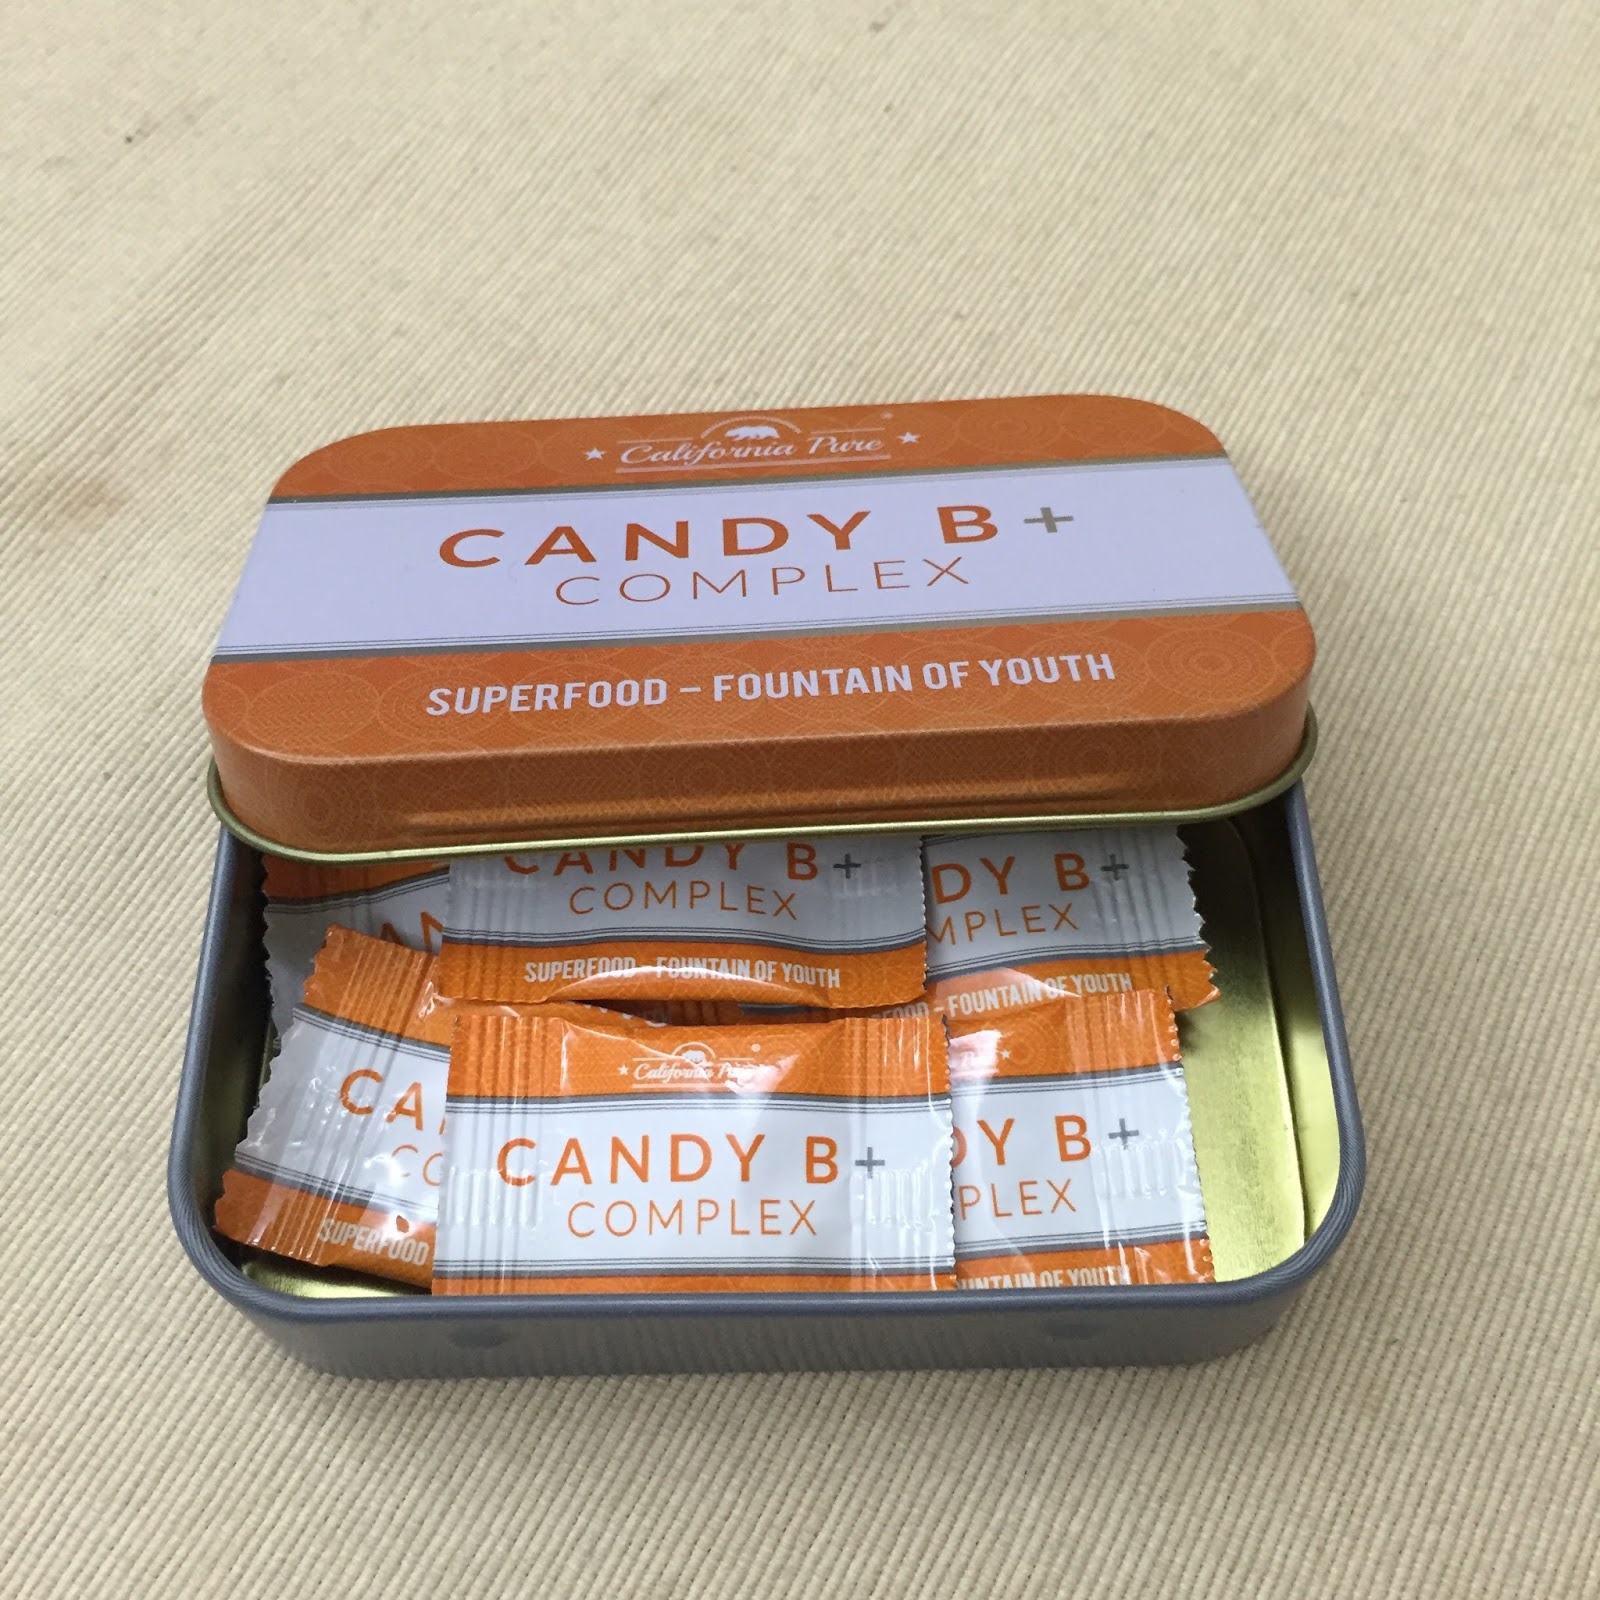 Candy B+ Complex  Gula-Gula Khas Untuk Lelaki: Candy B 